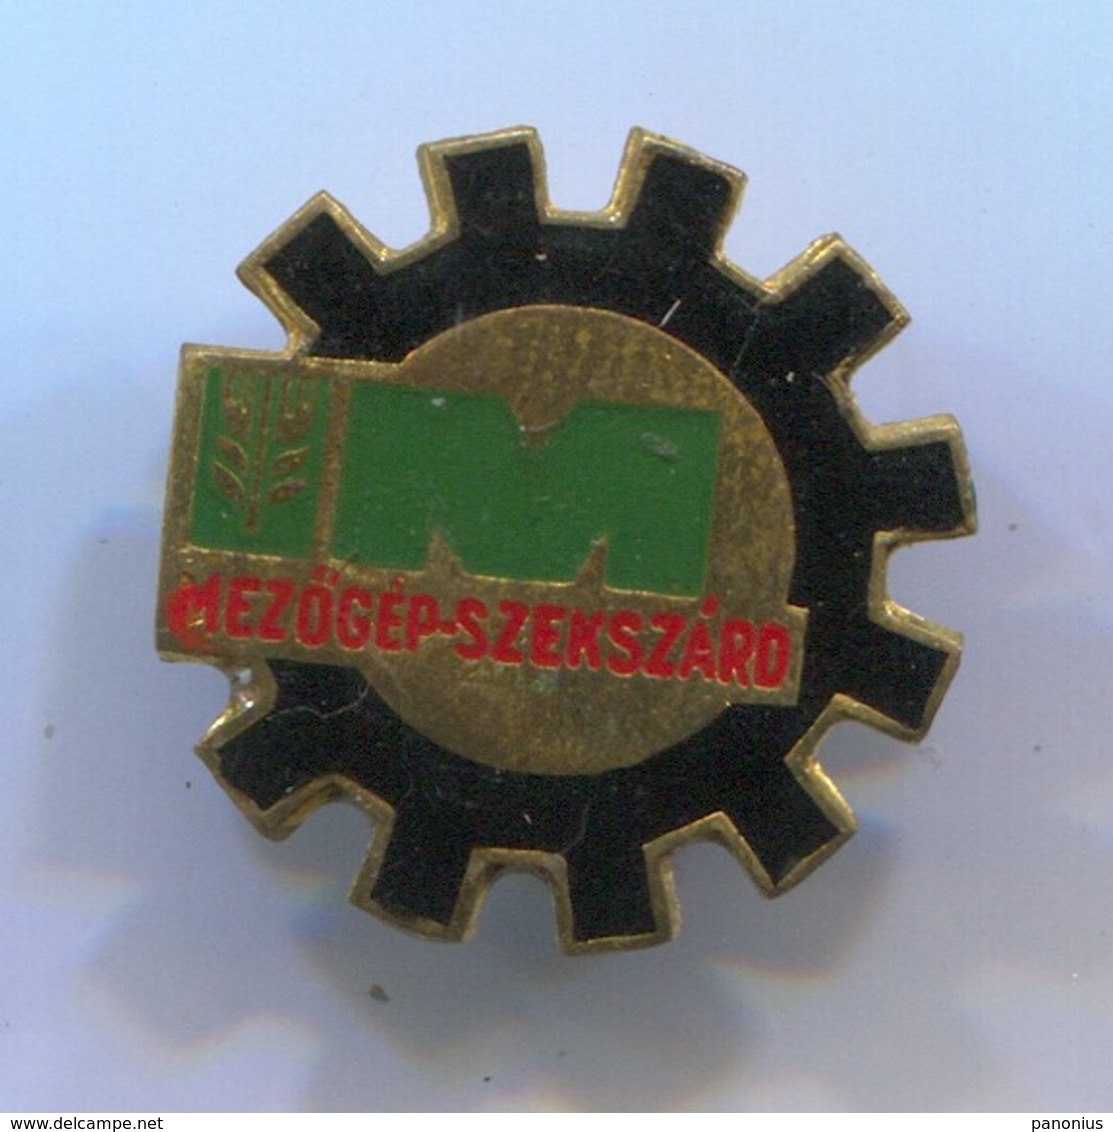 MEZOGEP, Szekszard Hungary - Tractor, Trattore, Agricultural Machinery, Landtechnik, Vintage Pin, Badge, Abzeichen - Transportation